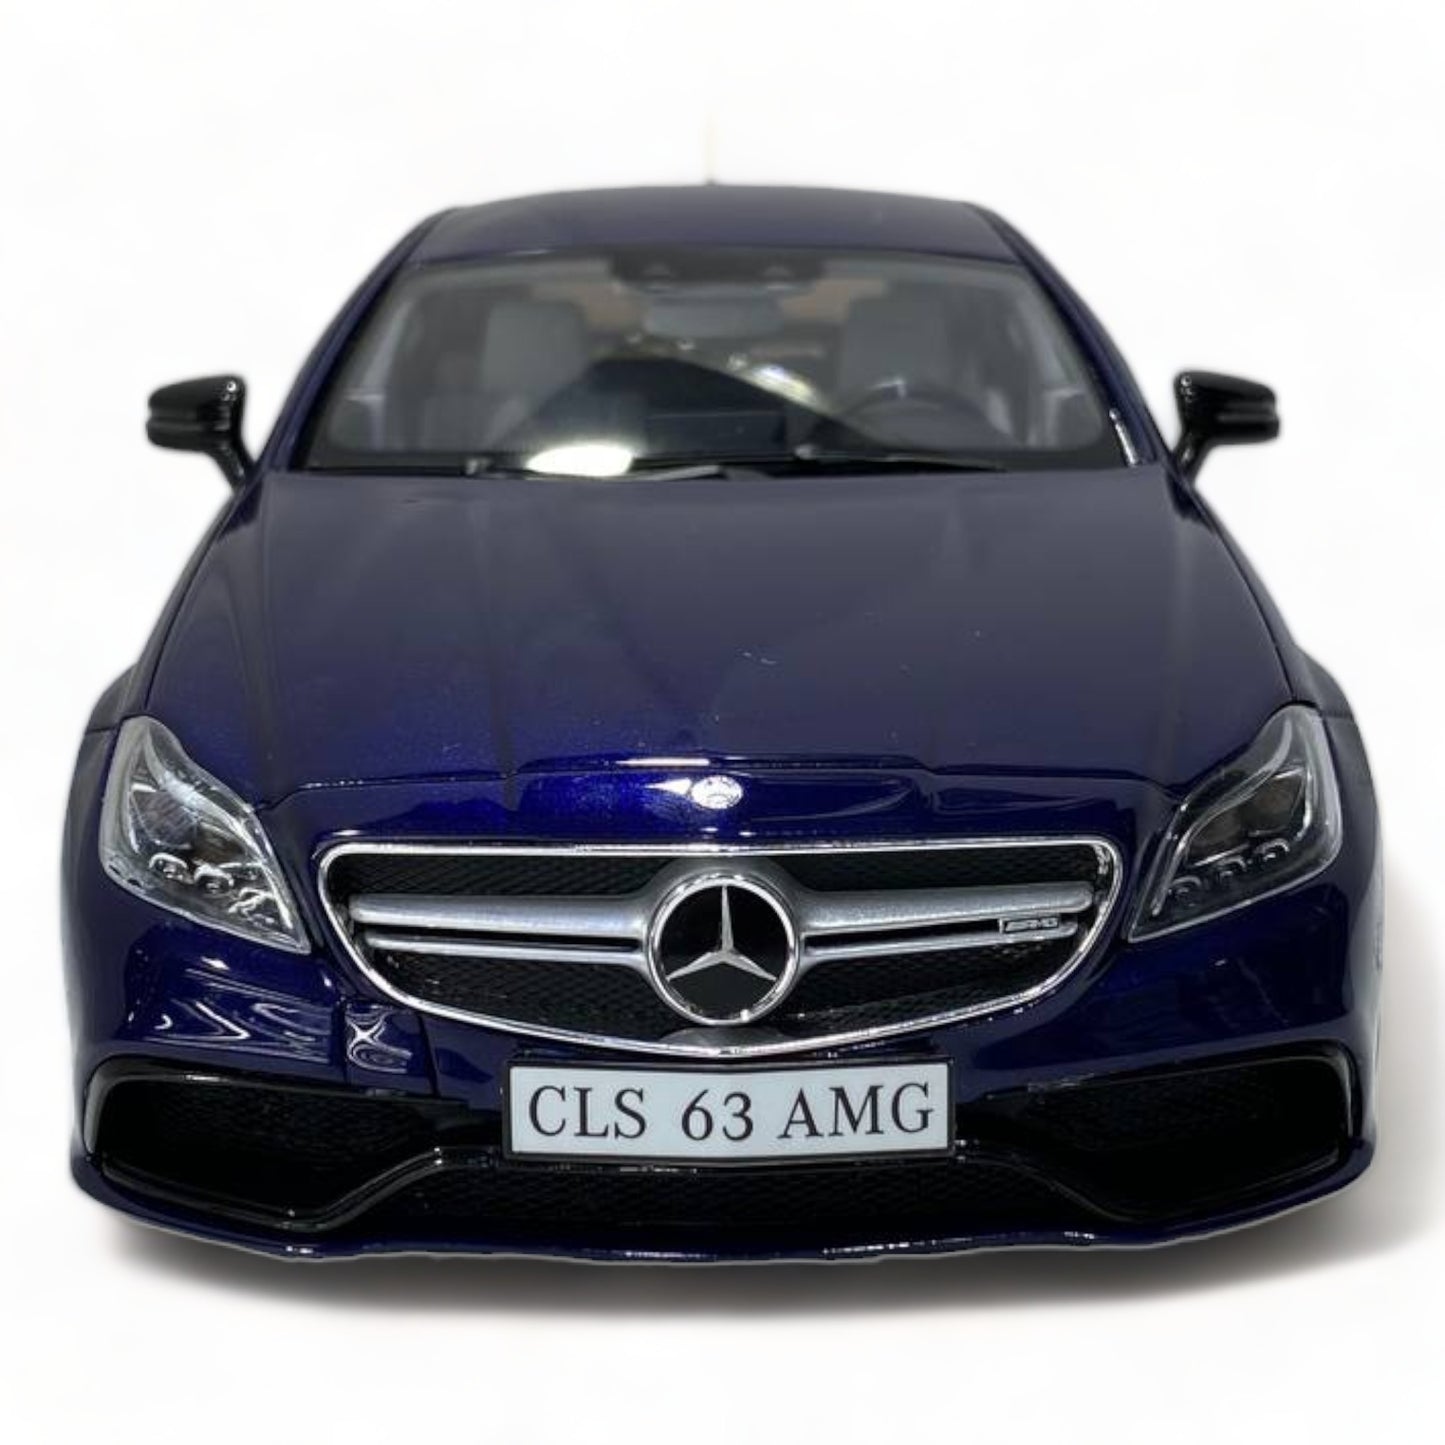 1/18 Mercedes Benz AMG CLS 63 Shooting Brake Blue Scale Model Car|Sold in Dturman.com Dubai UAE.